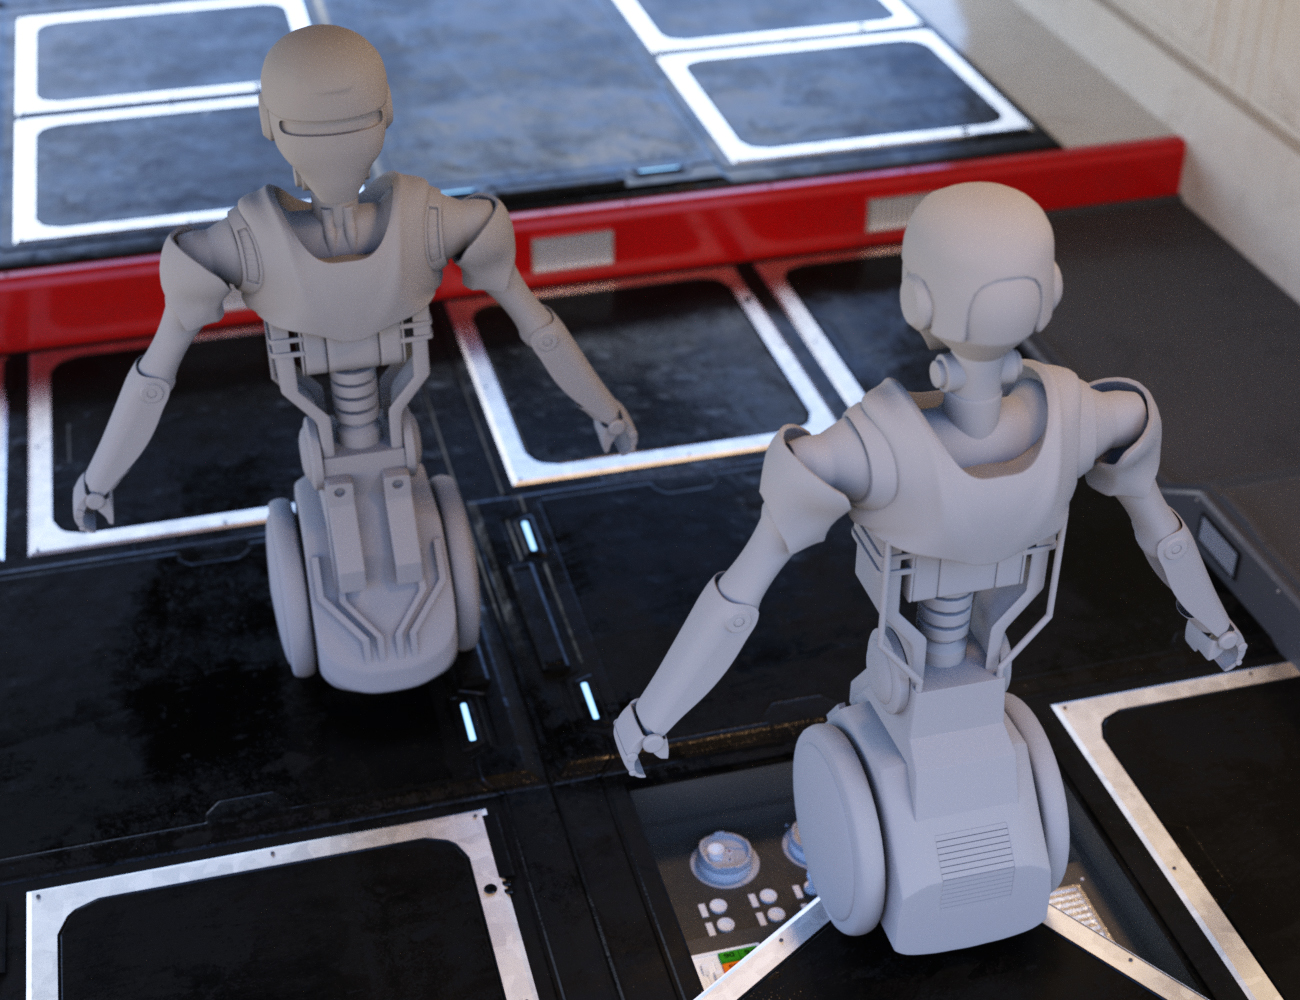 Service Robot by: Charlie, 3D Models by Daz 3D